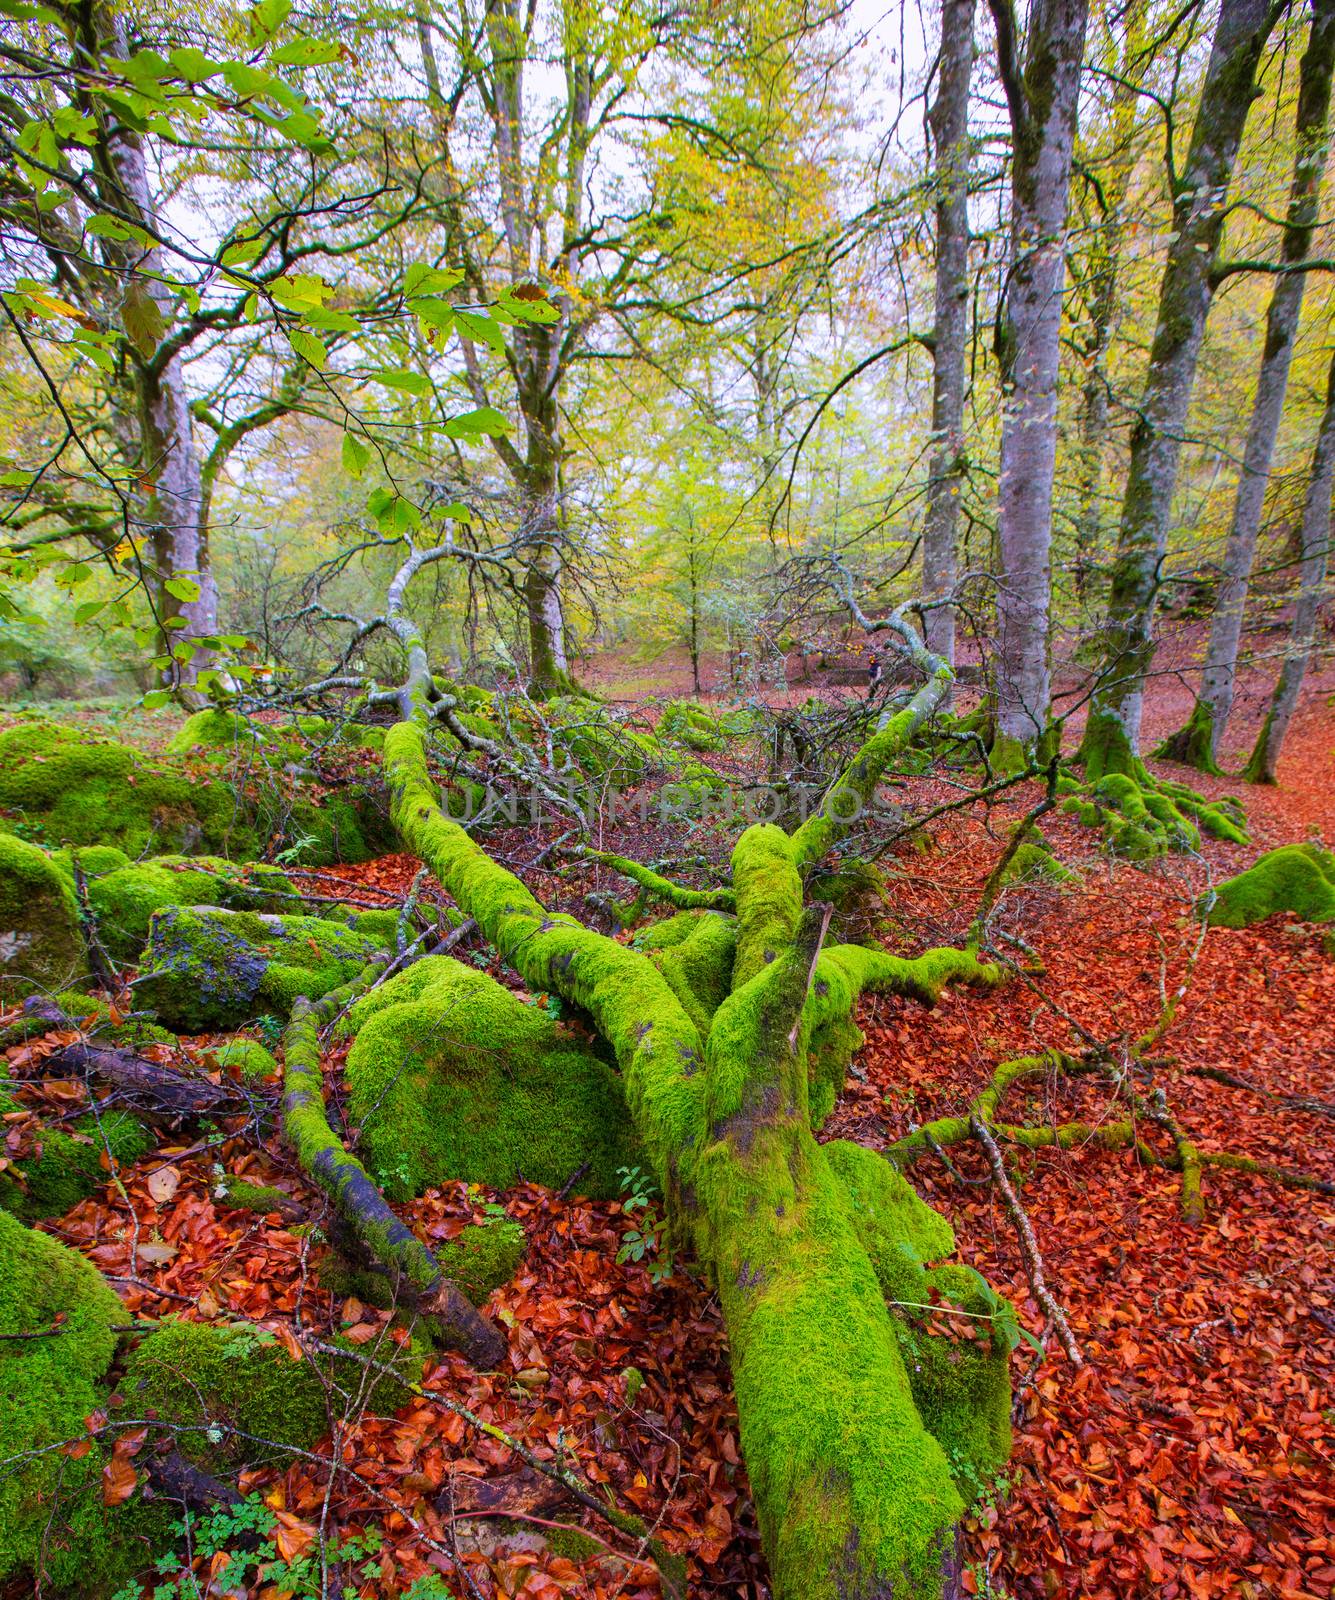 Autumn Selva de Irati fall beech jungle in Navarra Pyrenees of Spain